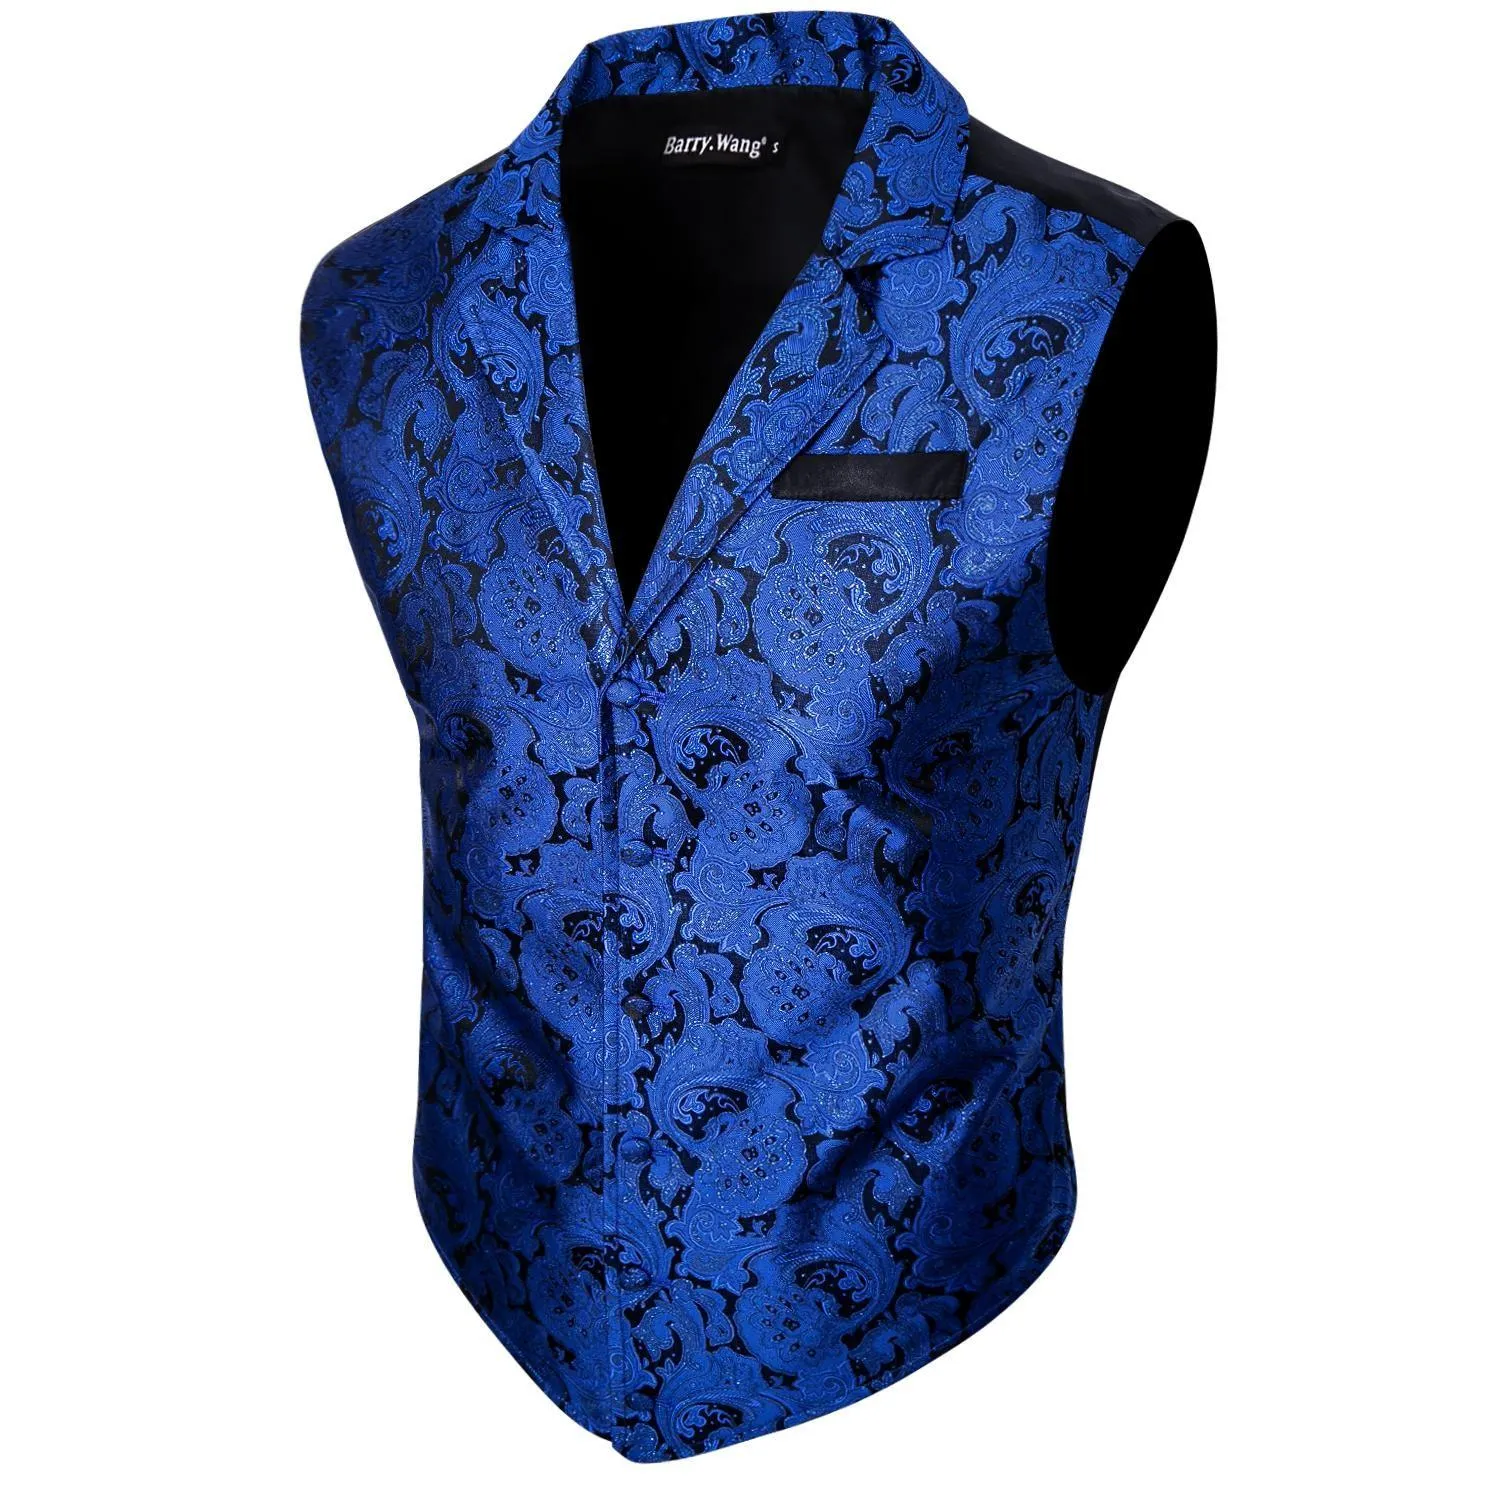 vests blue mens singlebreasted paisly silk waistcoat suit collar arrival autumn mens sleeveless suit vest barry.wang designer